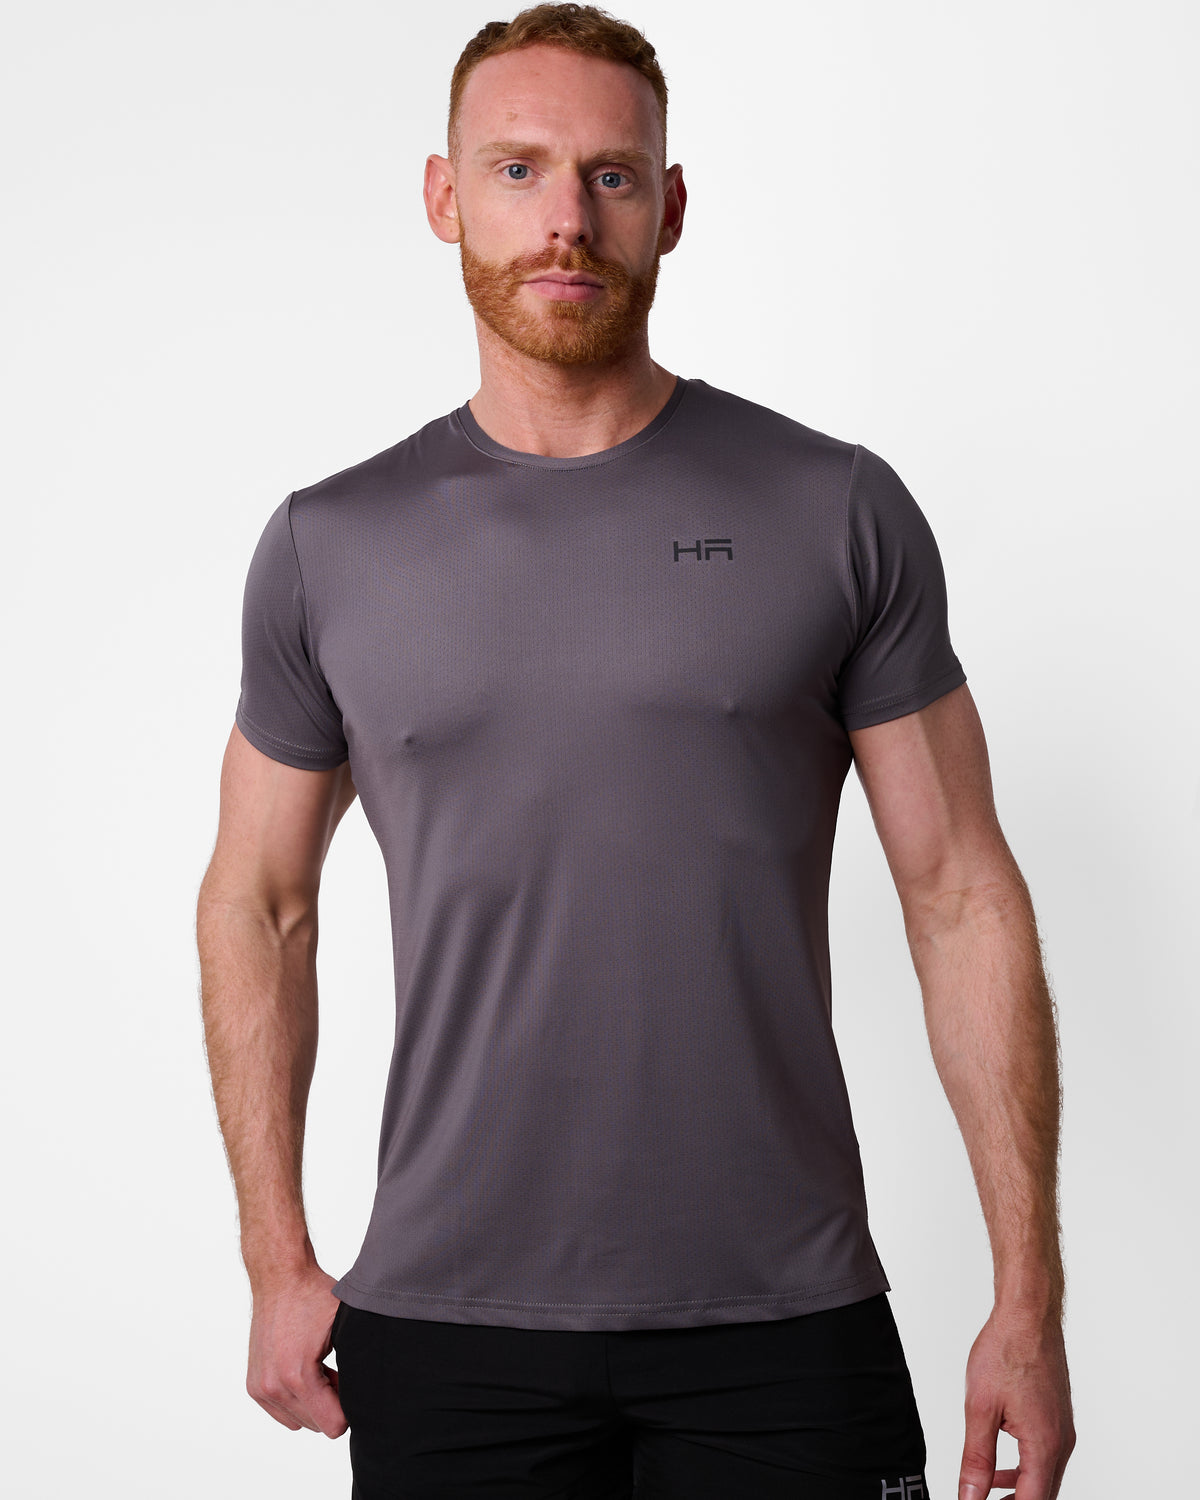 Sport Training T-Shirt - Charcoal